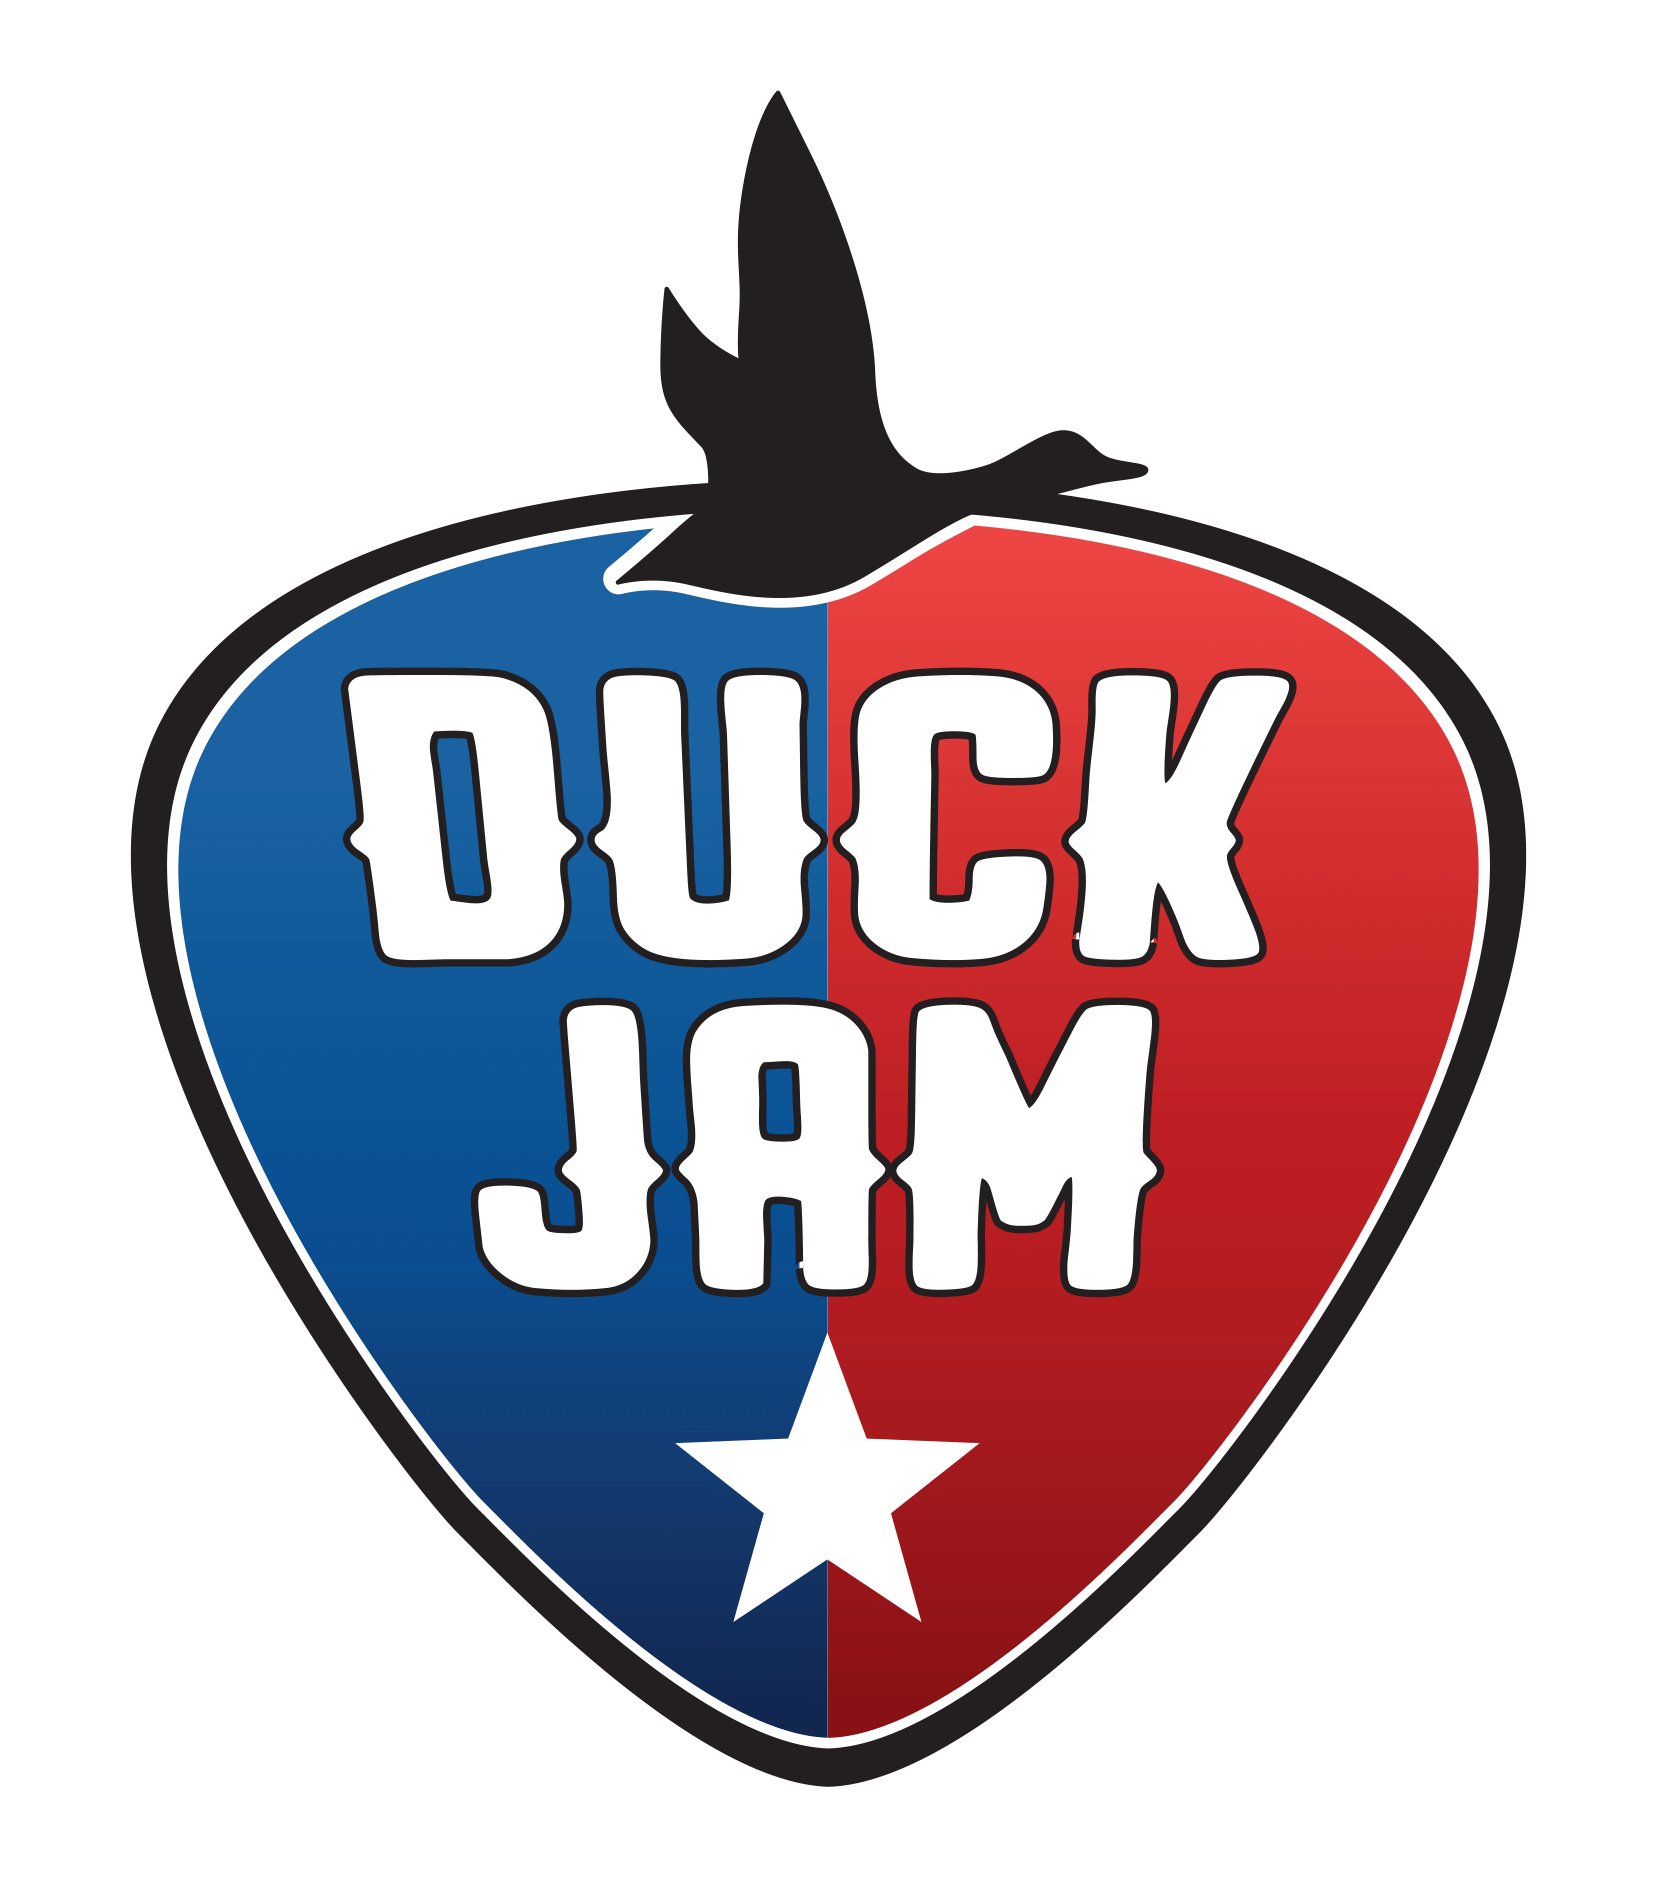 3_Duck Jam-min